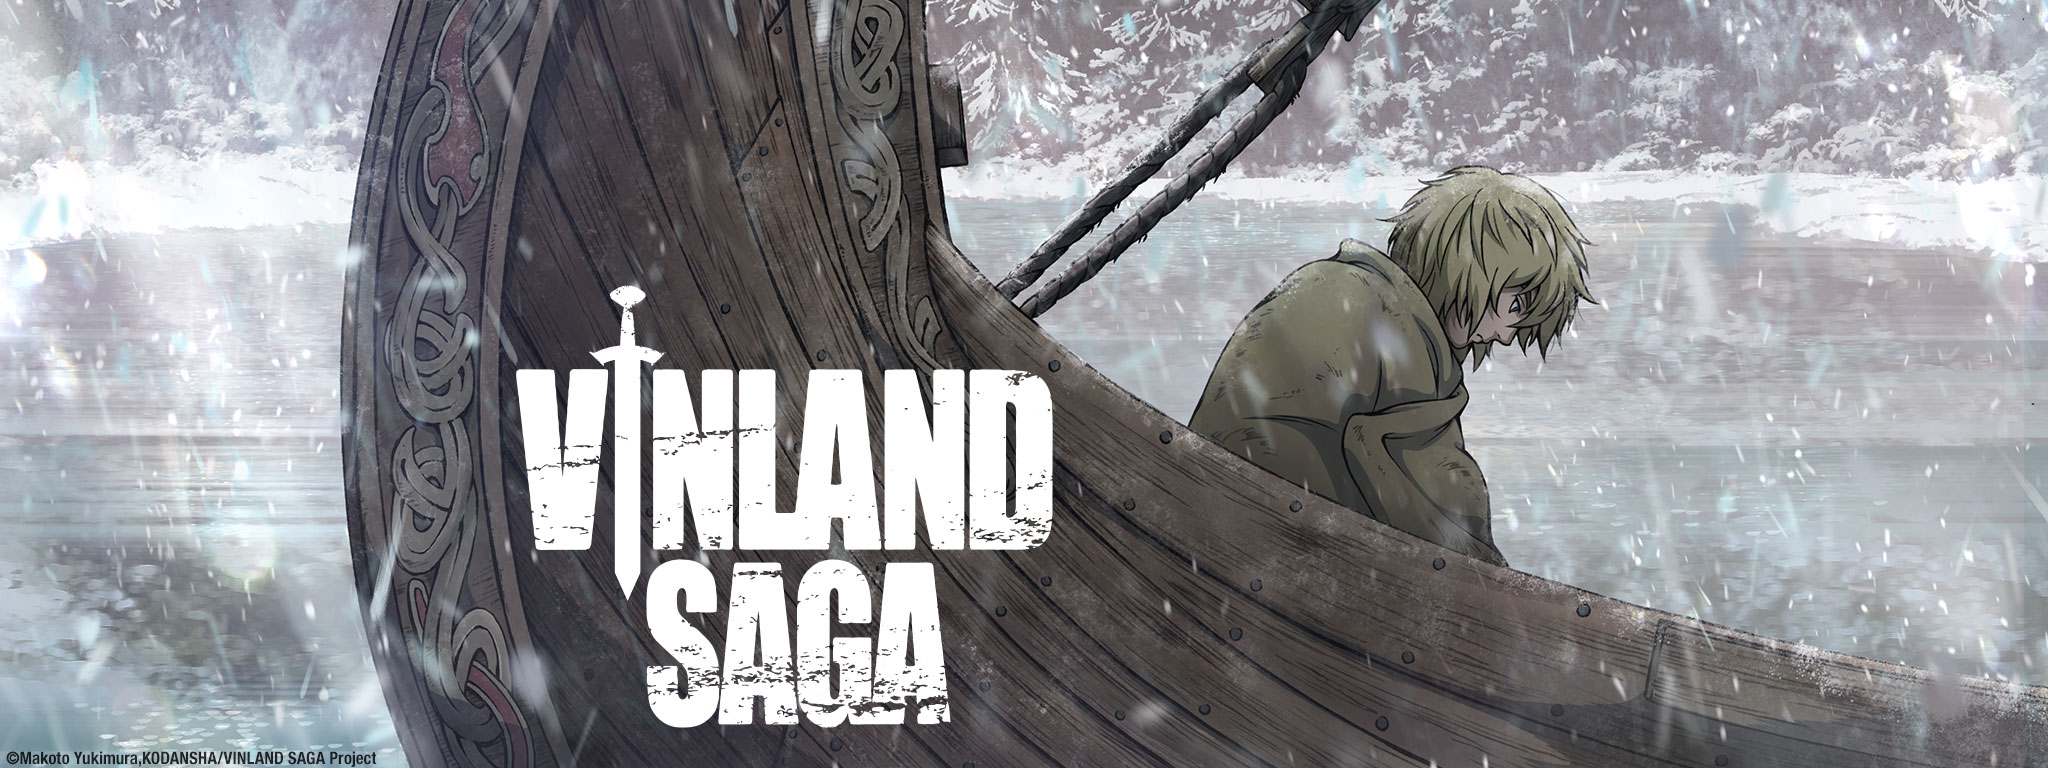 Title Art for Vinland Saga